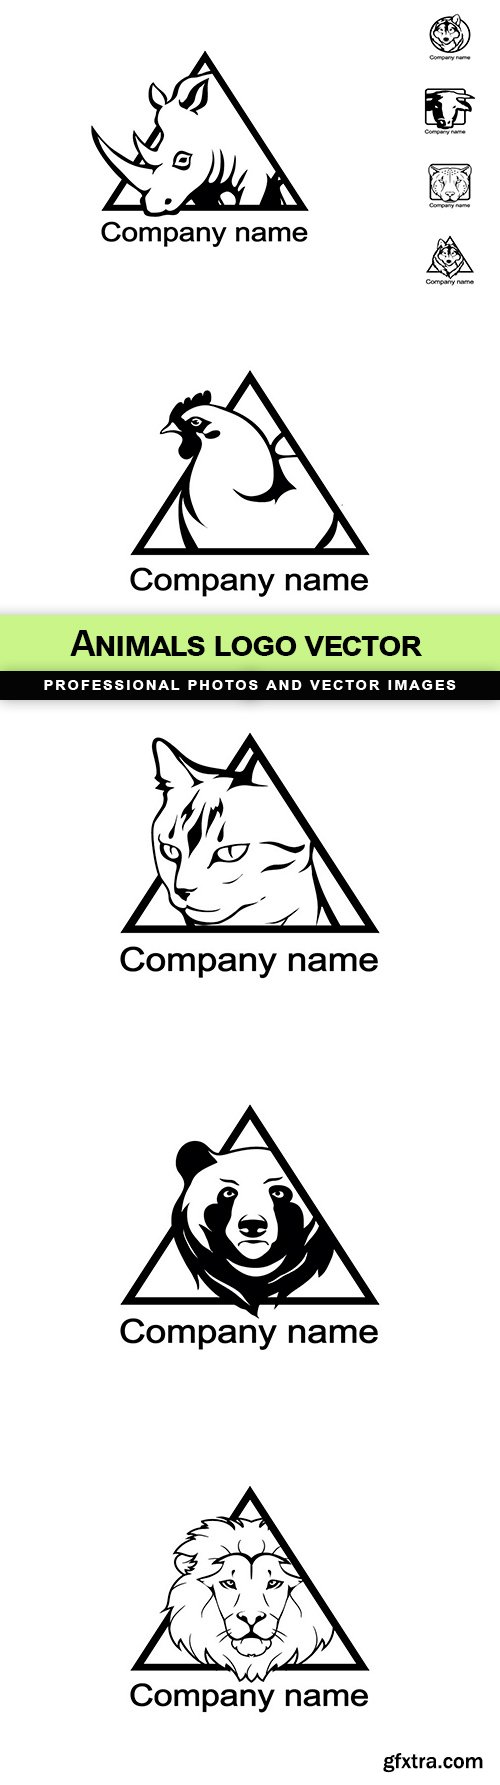 Animals logo Vector - 9 EPS